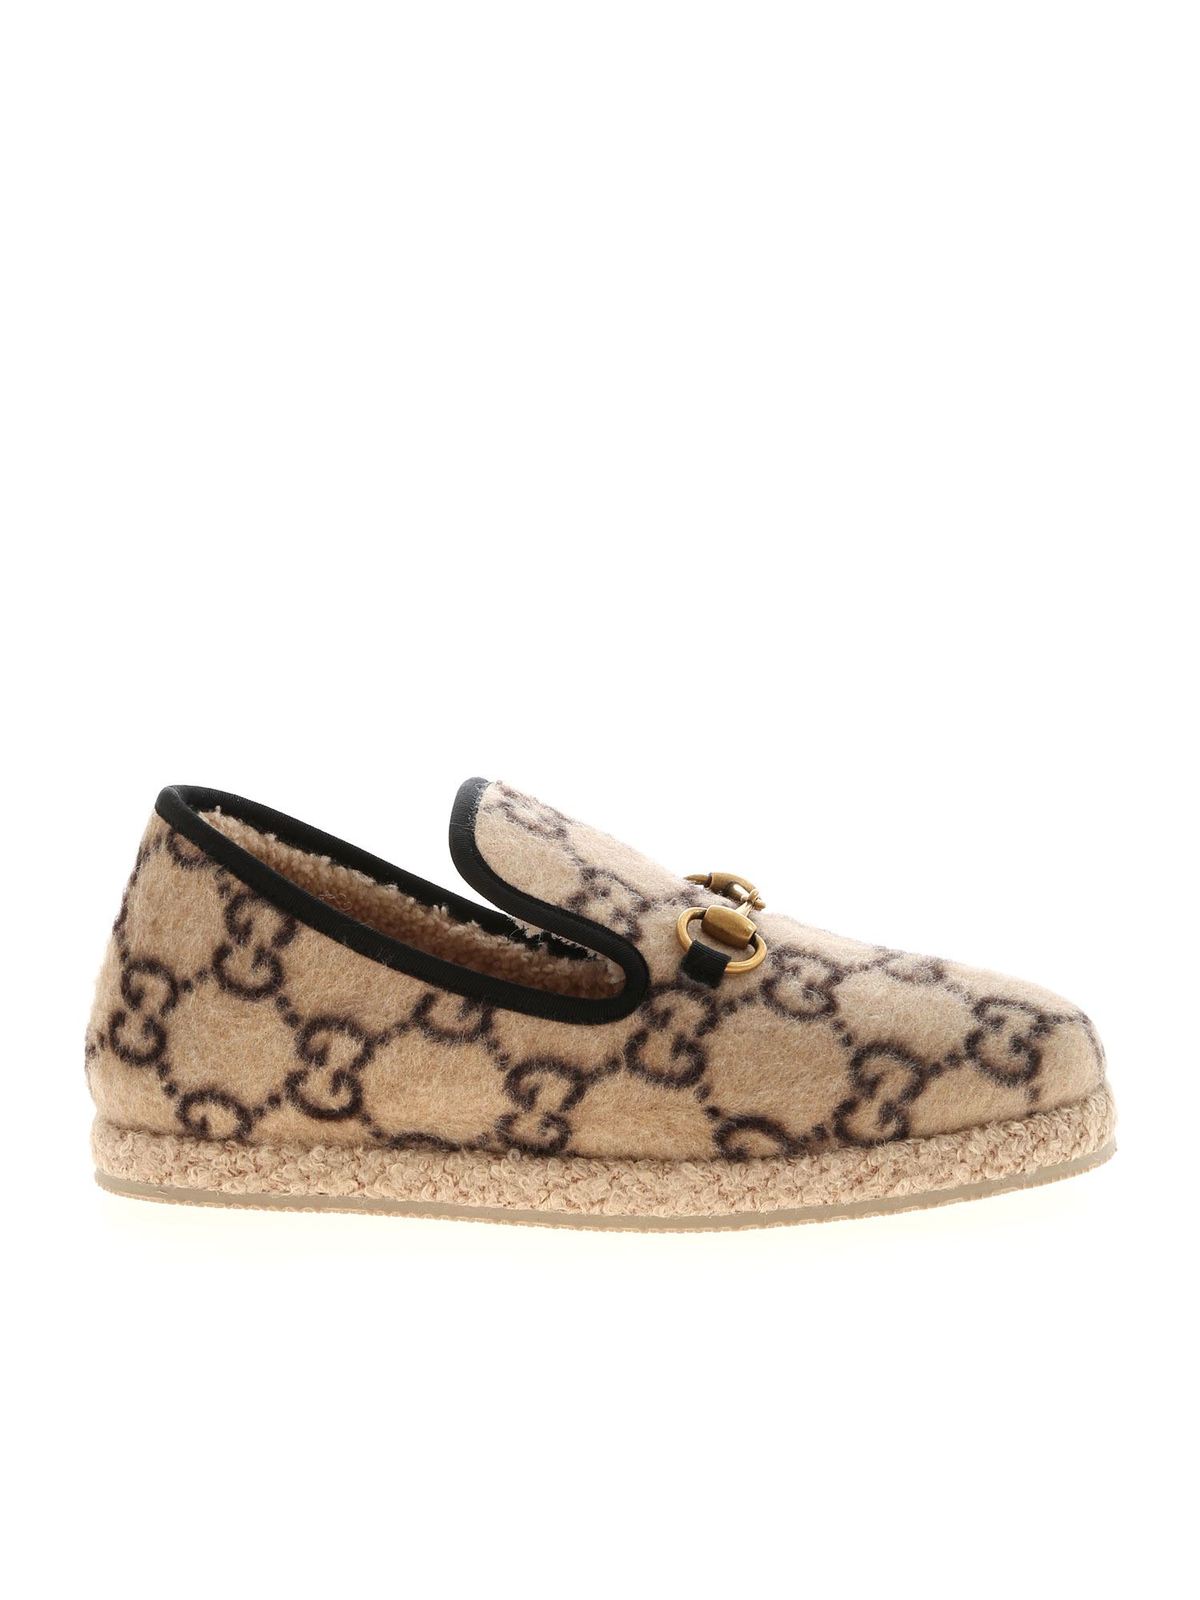 Gucci - GG wool loafers in beige 